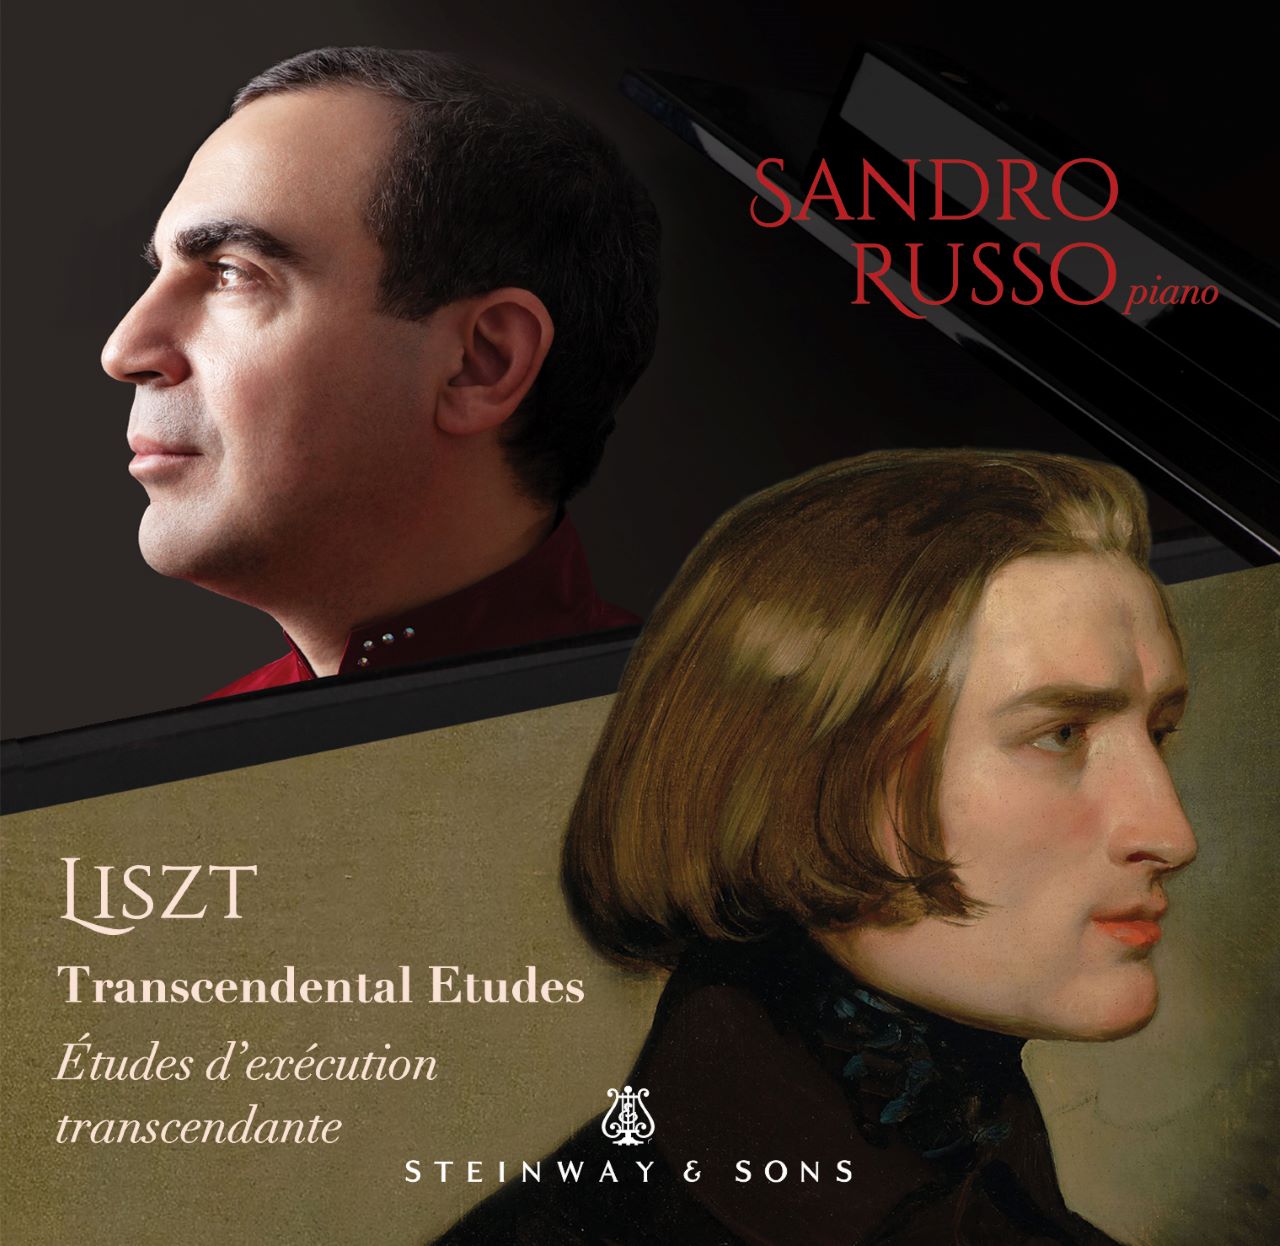 Pianist Sandro Russo Releases New Album